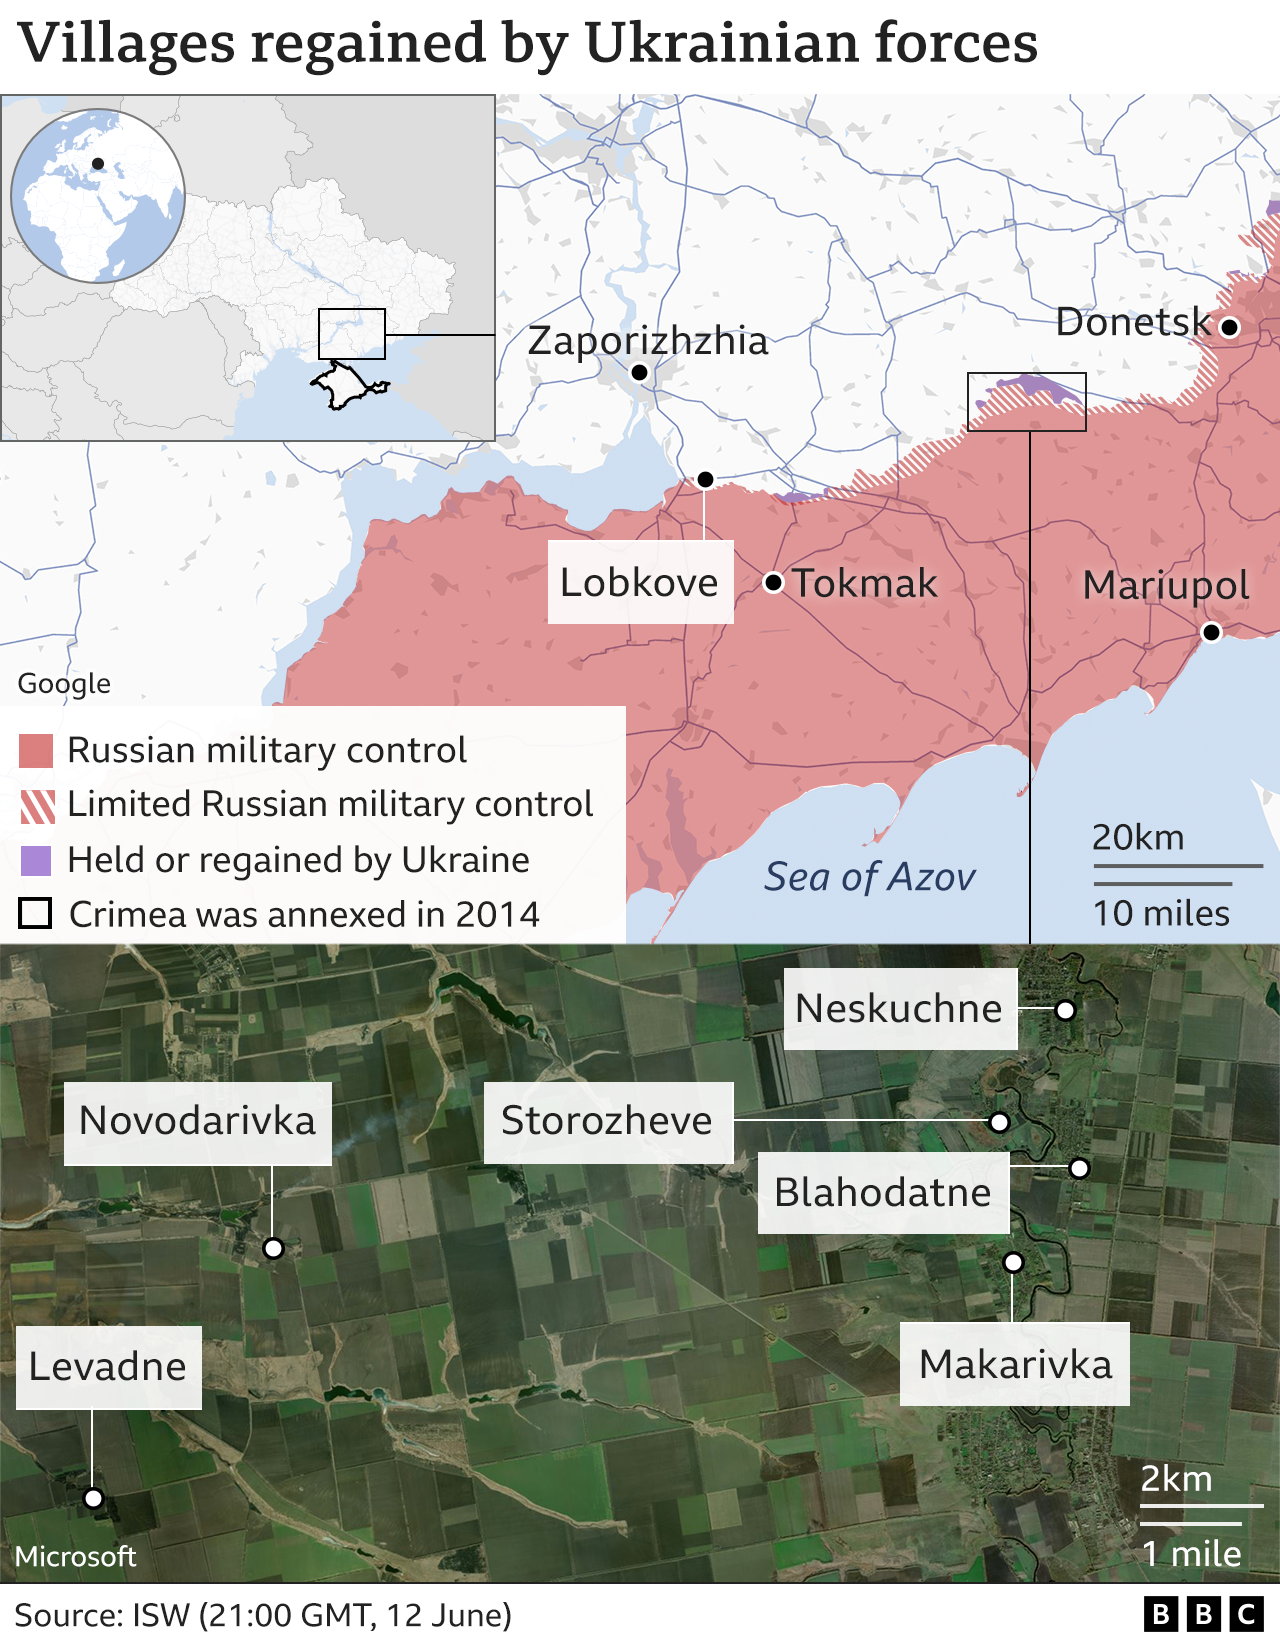 Map showing location of villages retaken by Ukrainian forces